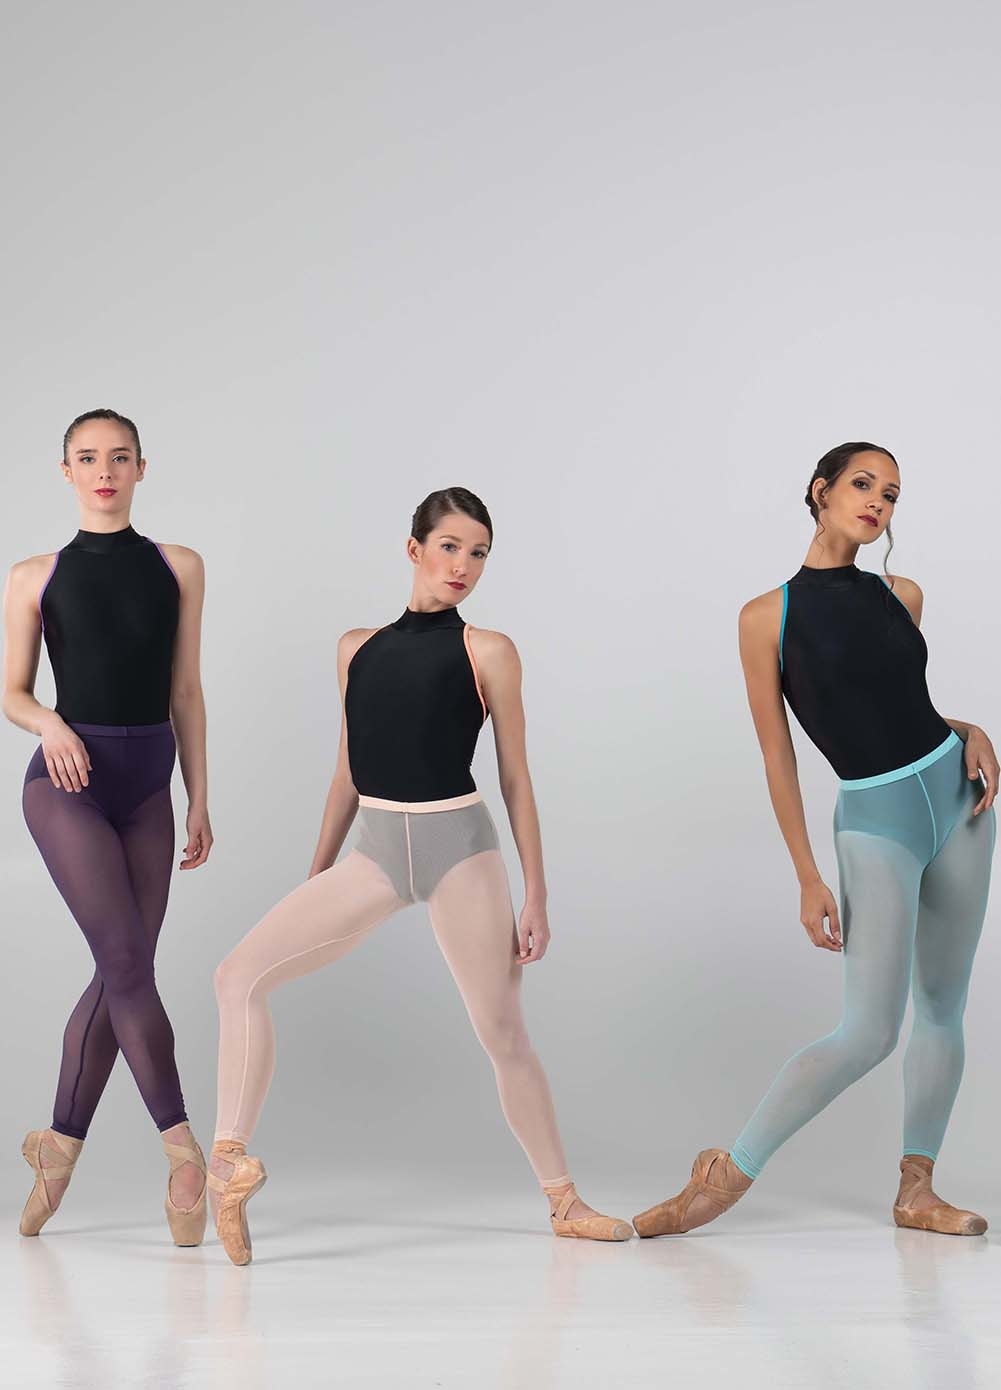 Women's Dance Pants, Ballet Rosa, Laetitia Leggings, $48.00, from